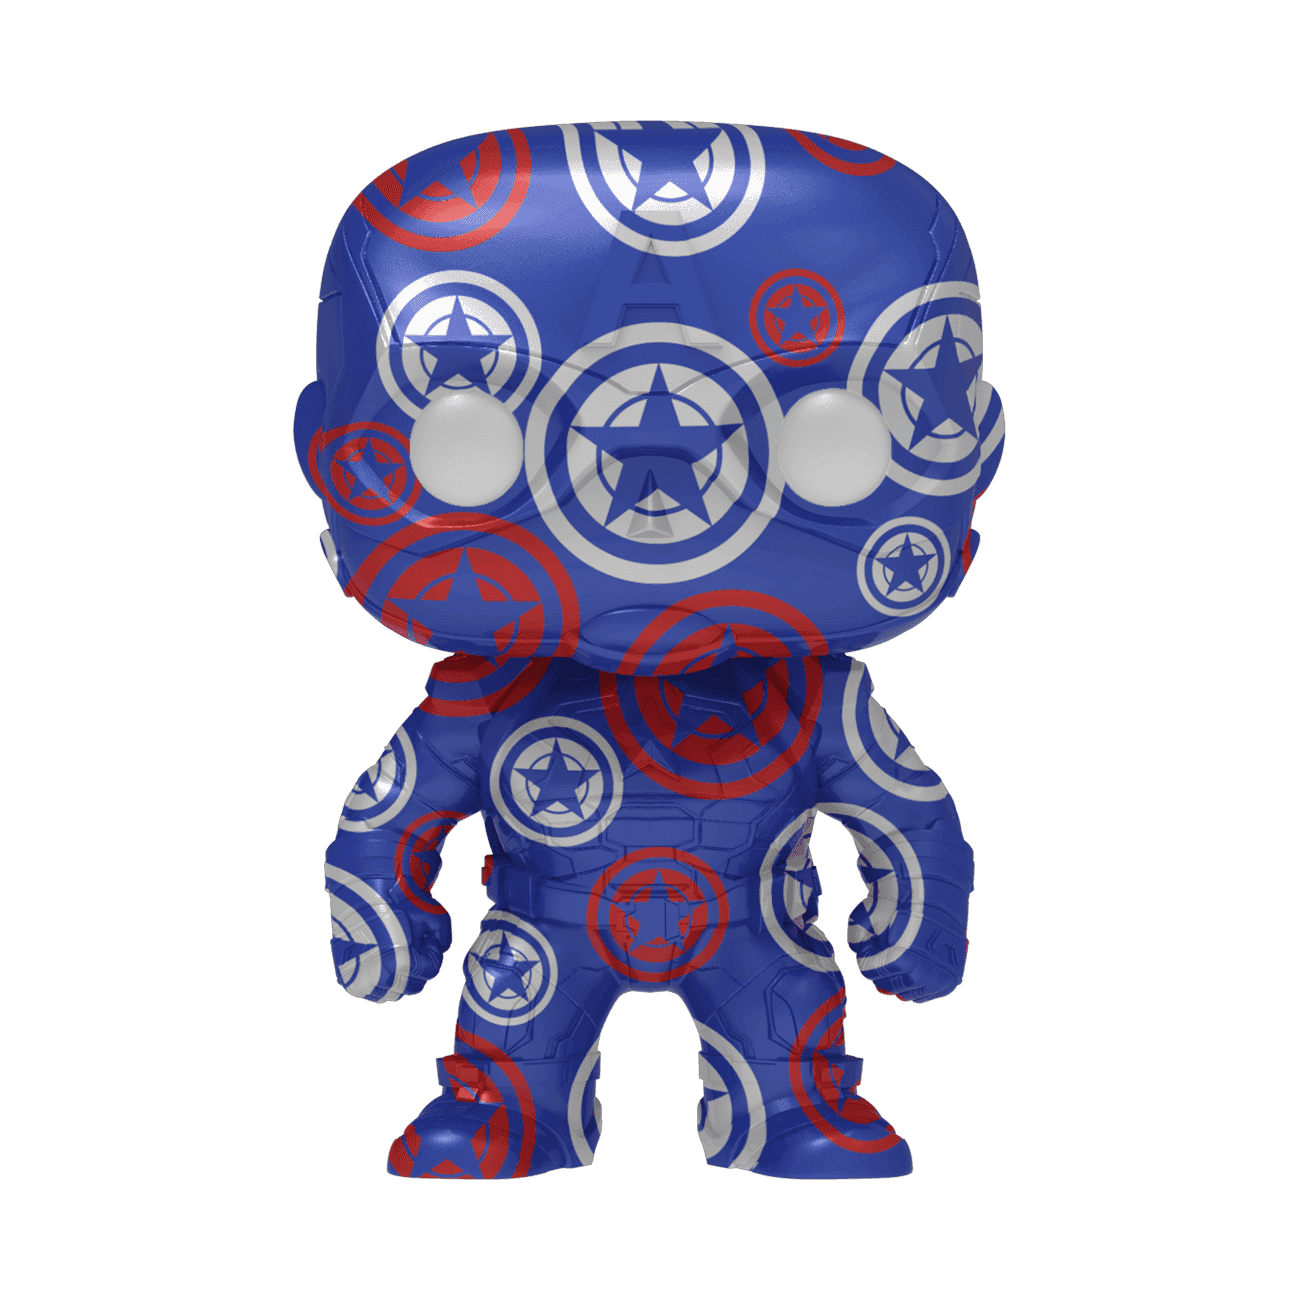 image de Captain America